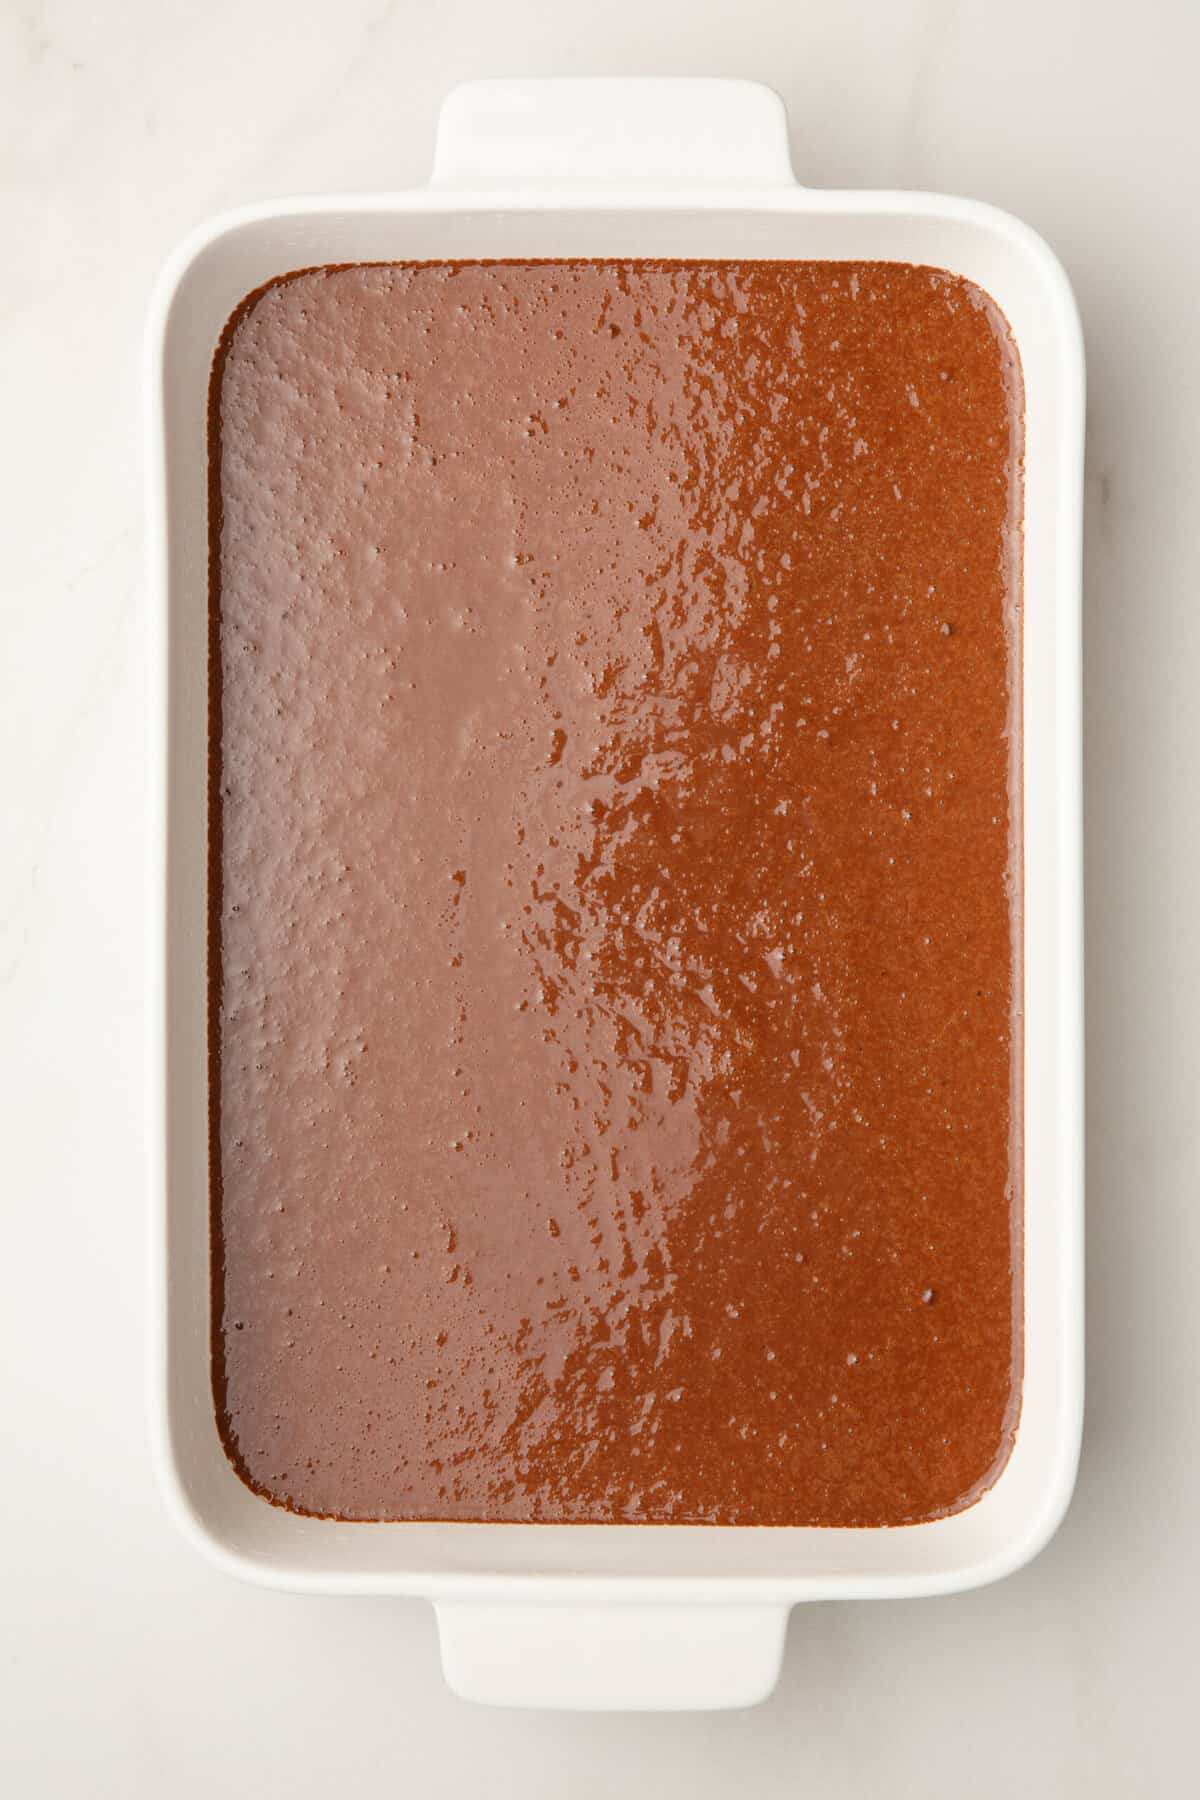 chocolate cake batter in a 9x13 casserole dish